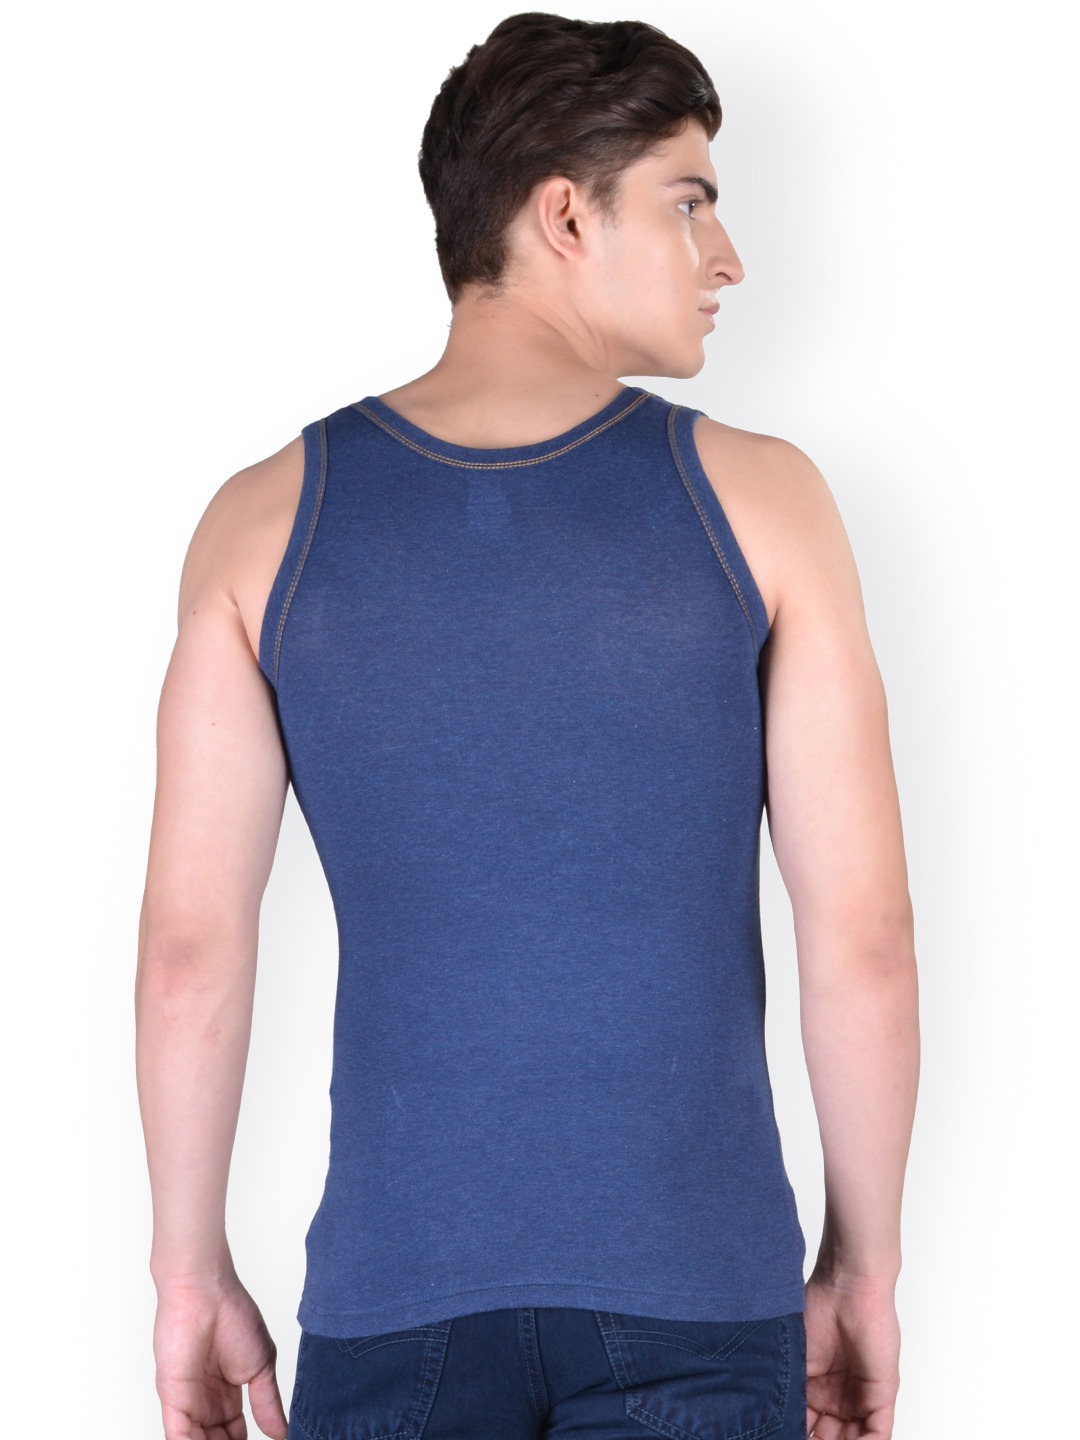 Clothing Innerwear Vests | Force NXT Pack of 2 Printed Assorted Innerwear Vests MNFL-91-po2-dnvm-cm - IK14414